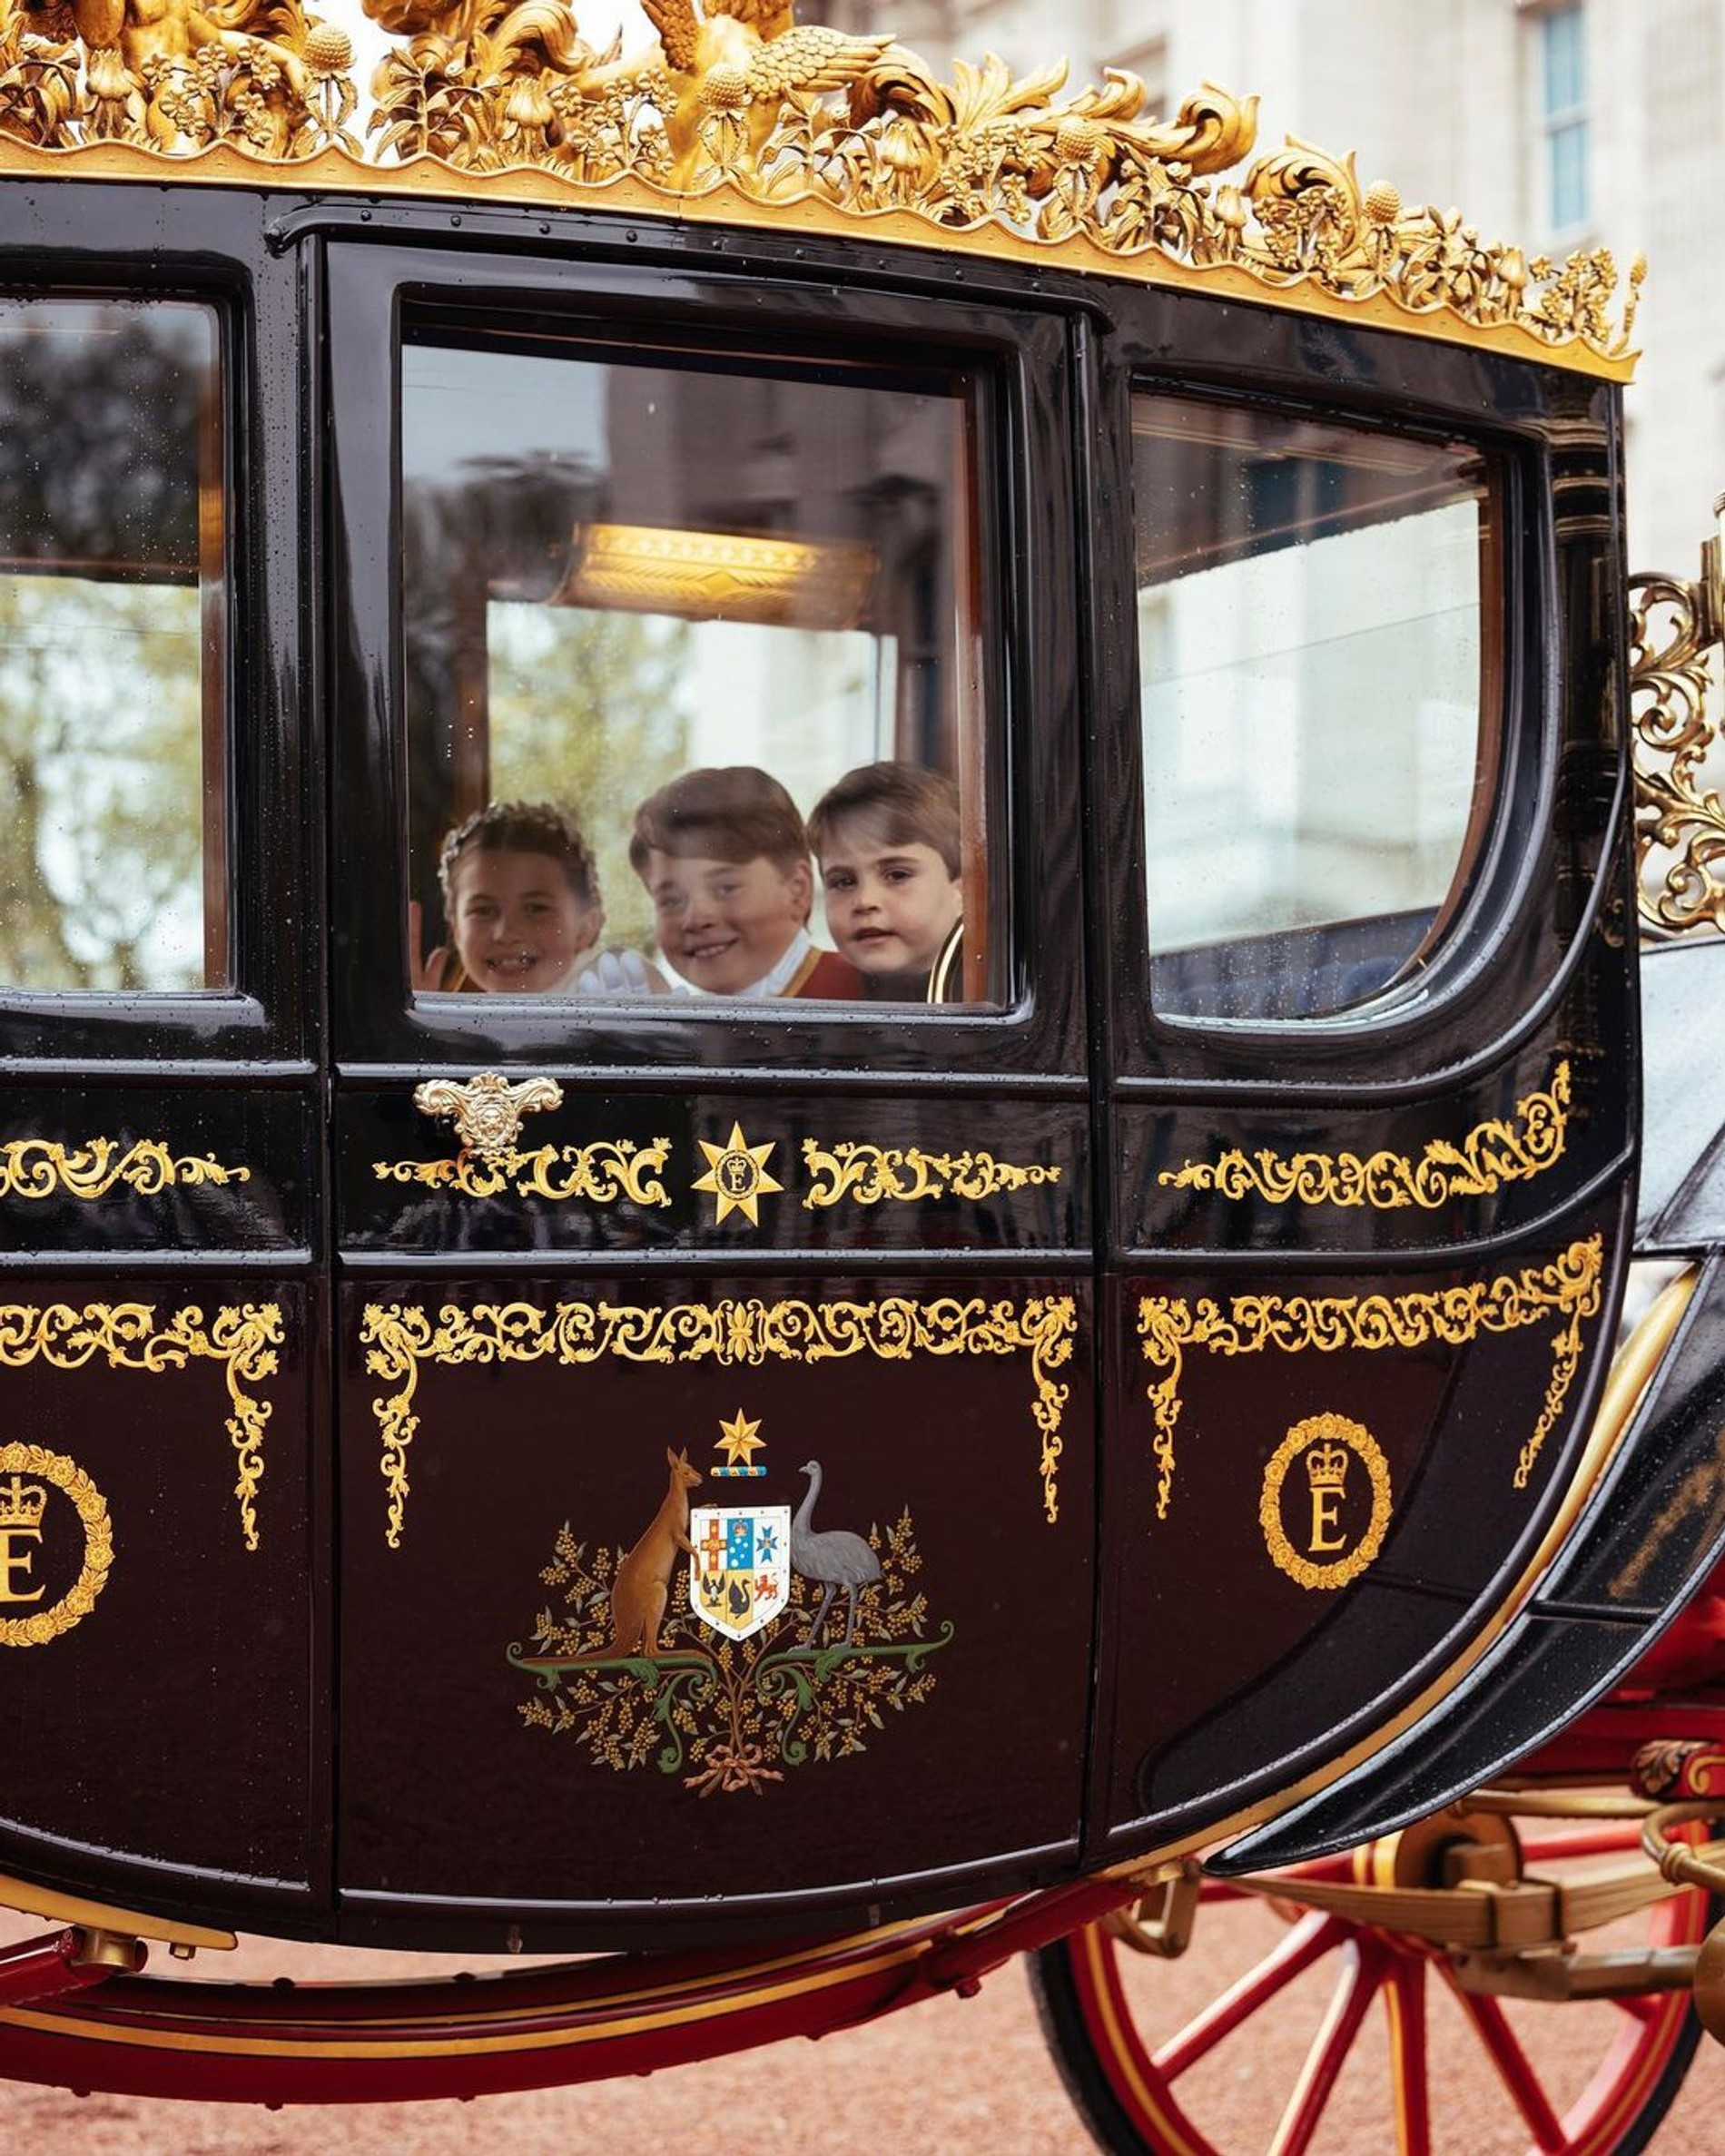 Шарлотта, Джордж и Луи в карете по пути в Букингемский дворец
Фото: Инстаграм* @princeandprincessofwales